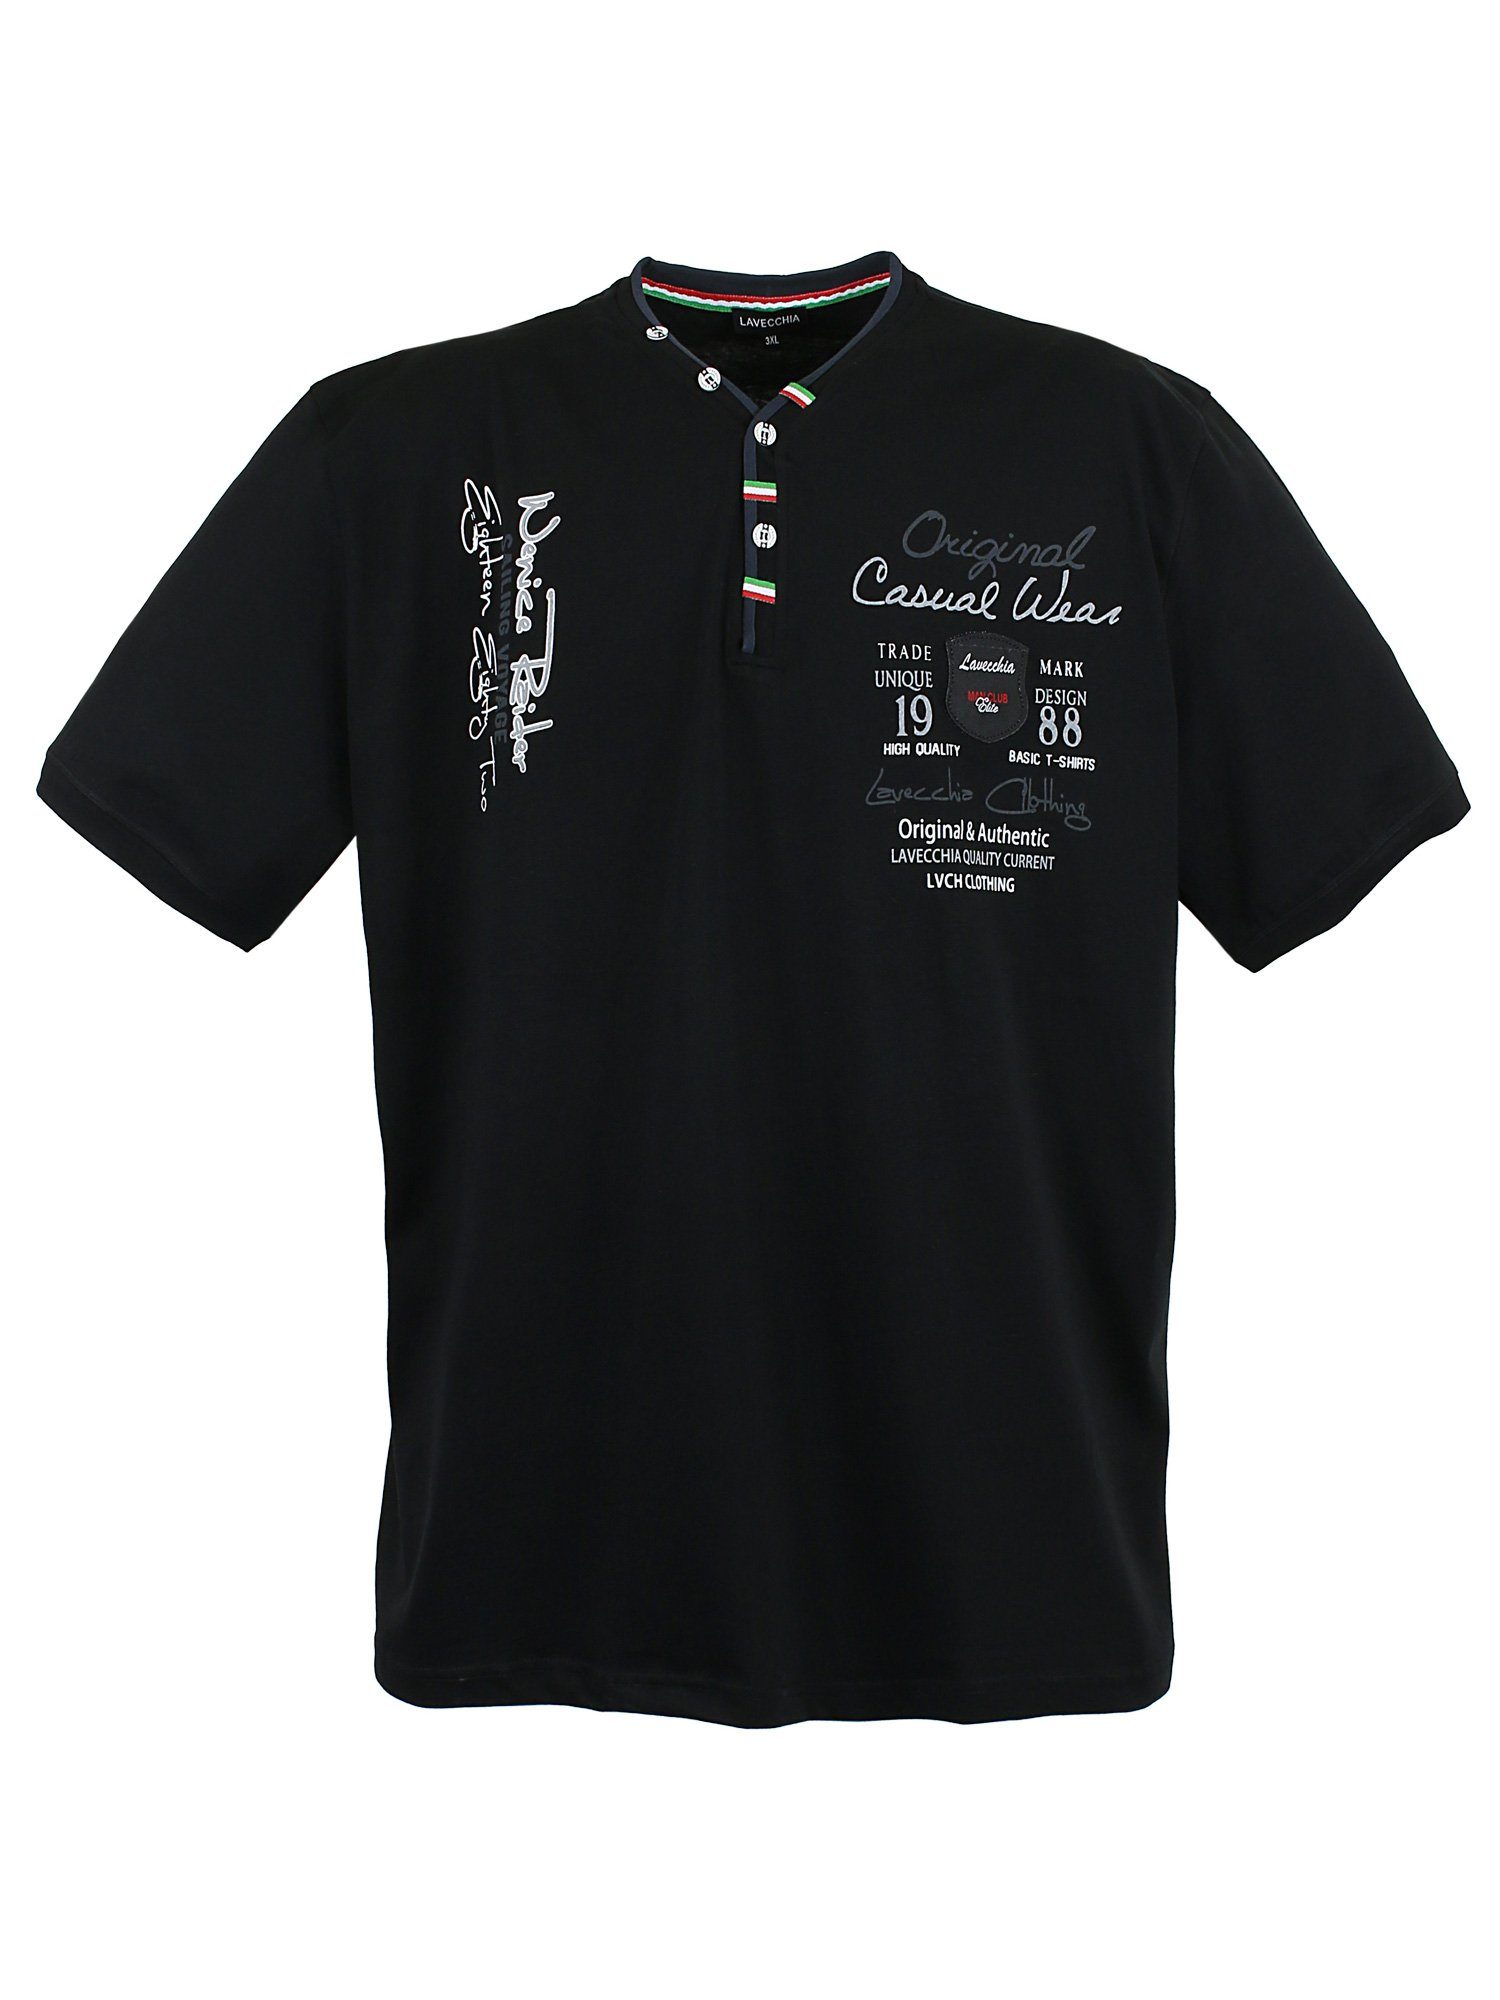 LV-2042 Lavecchia schwarz T-Shirt Herren V-Ausschnitt V-Shirt Herrenshirt Übergrößen